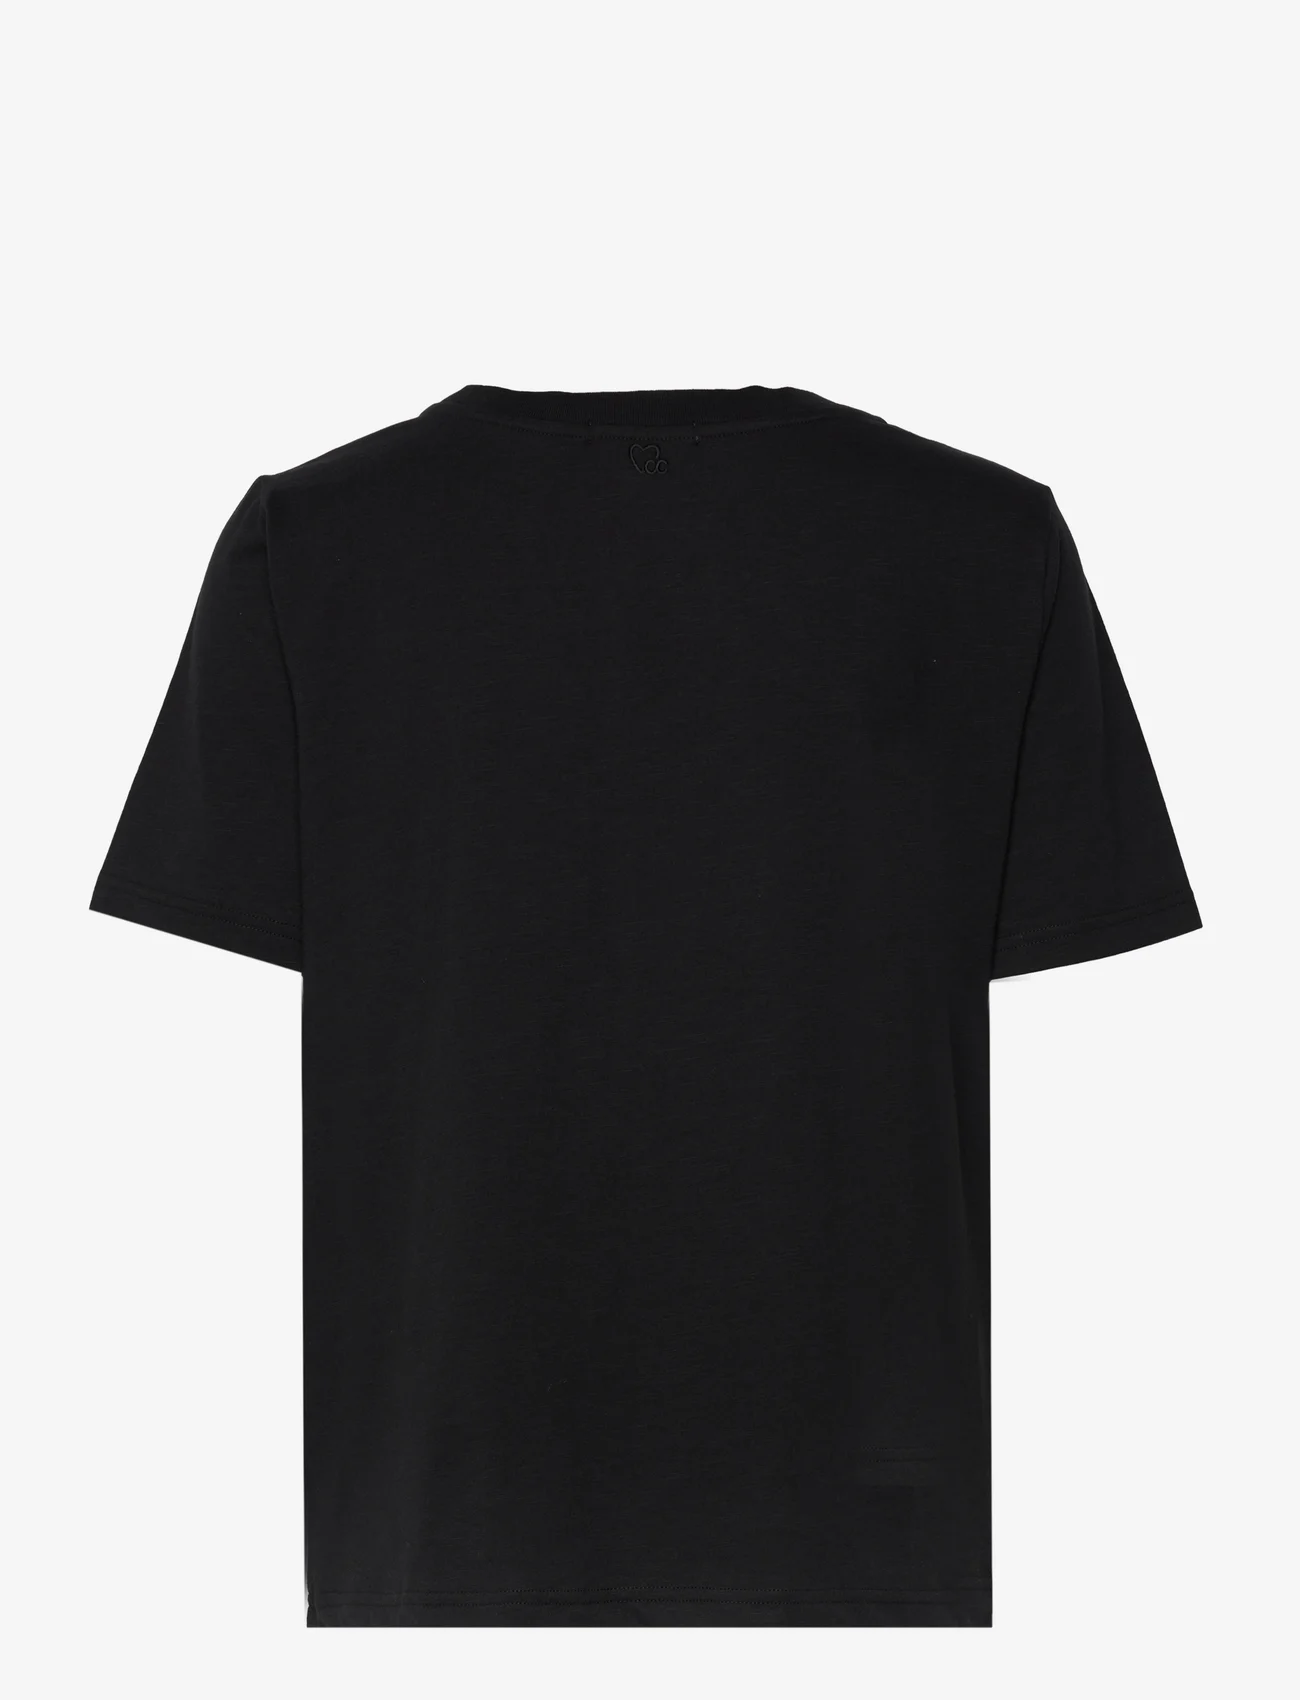 Coster Copenhagen - CC Heart regular t-shirt - laagste prijzen - black - 1